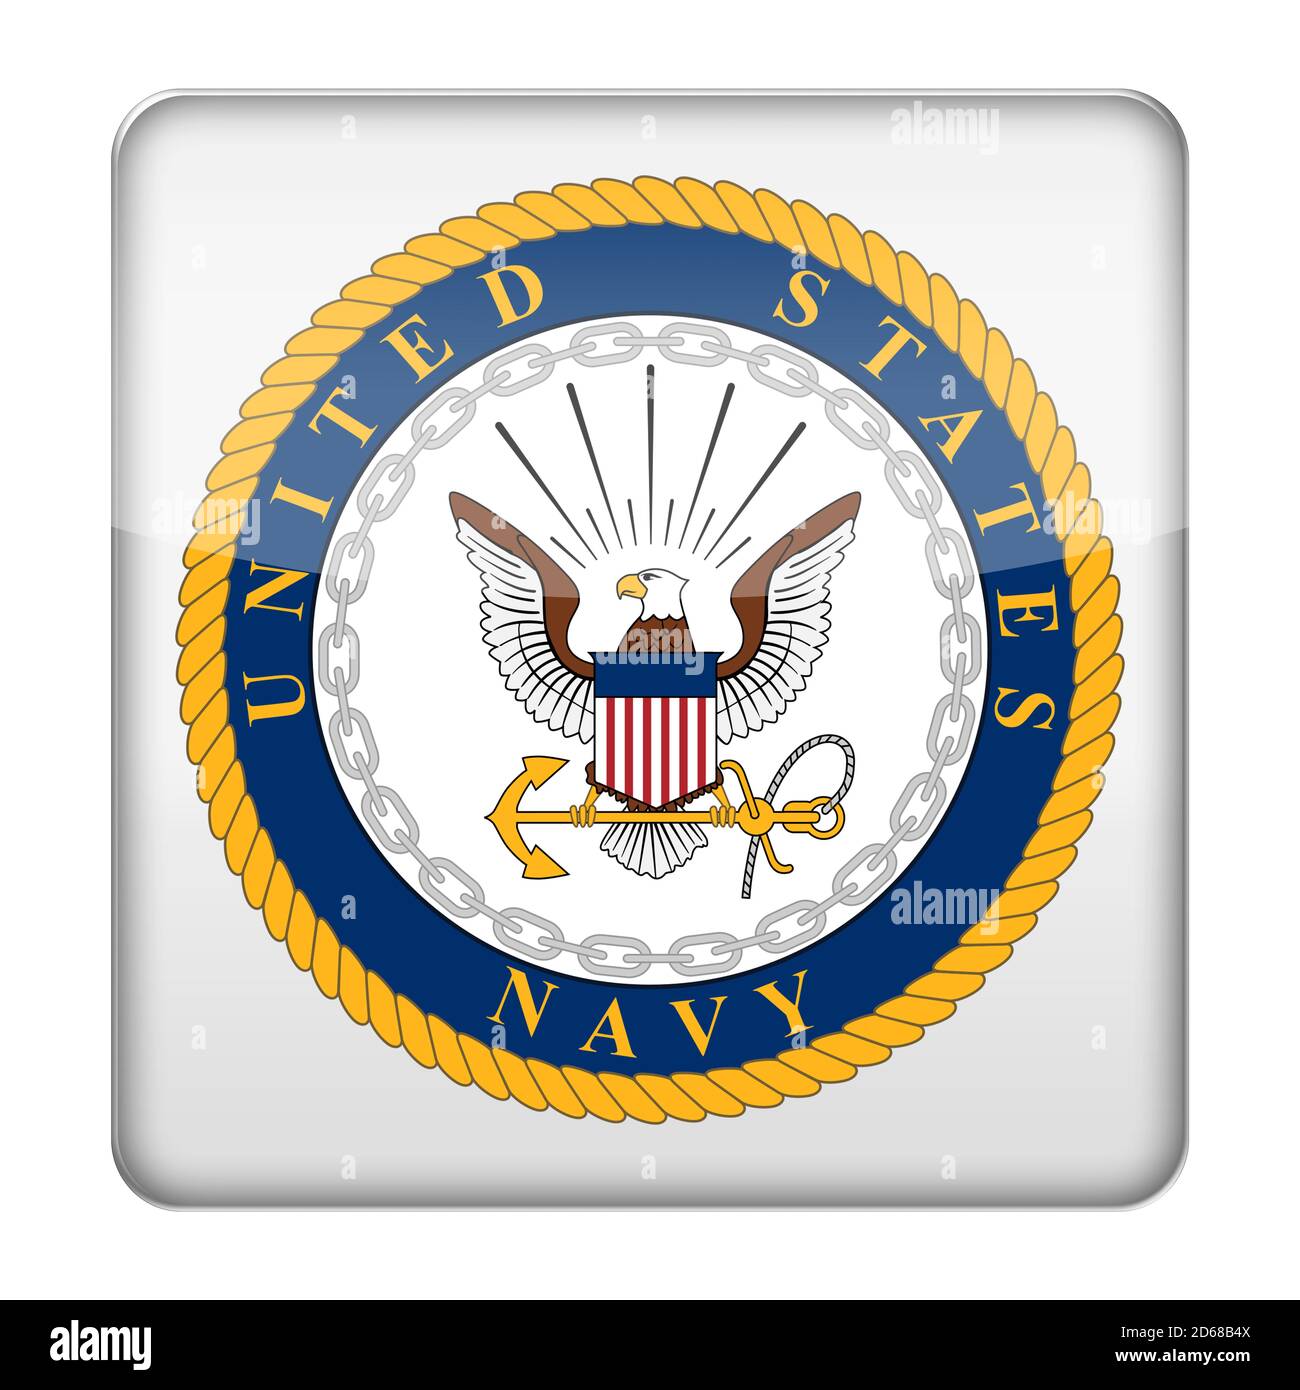 United States Navy usn logo Stock Photo